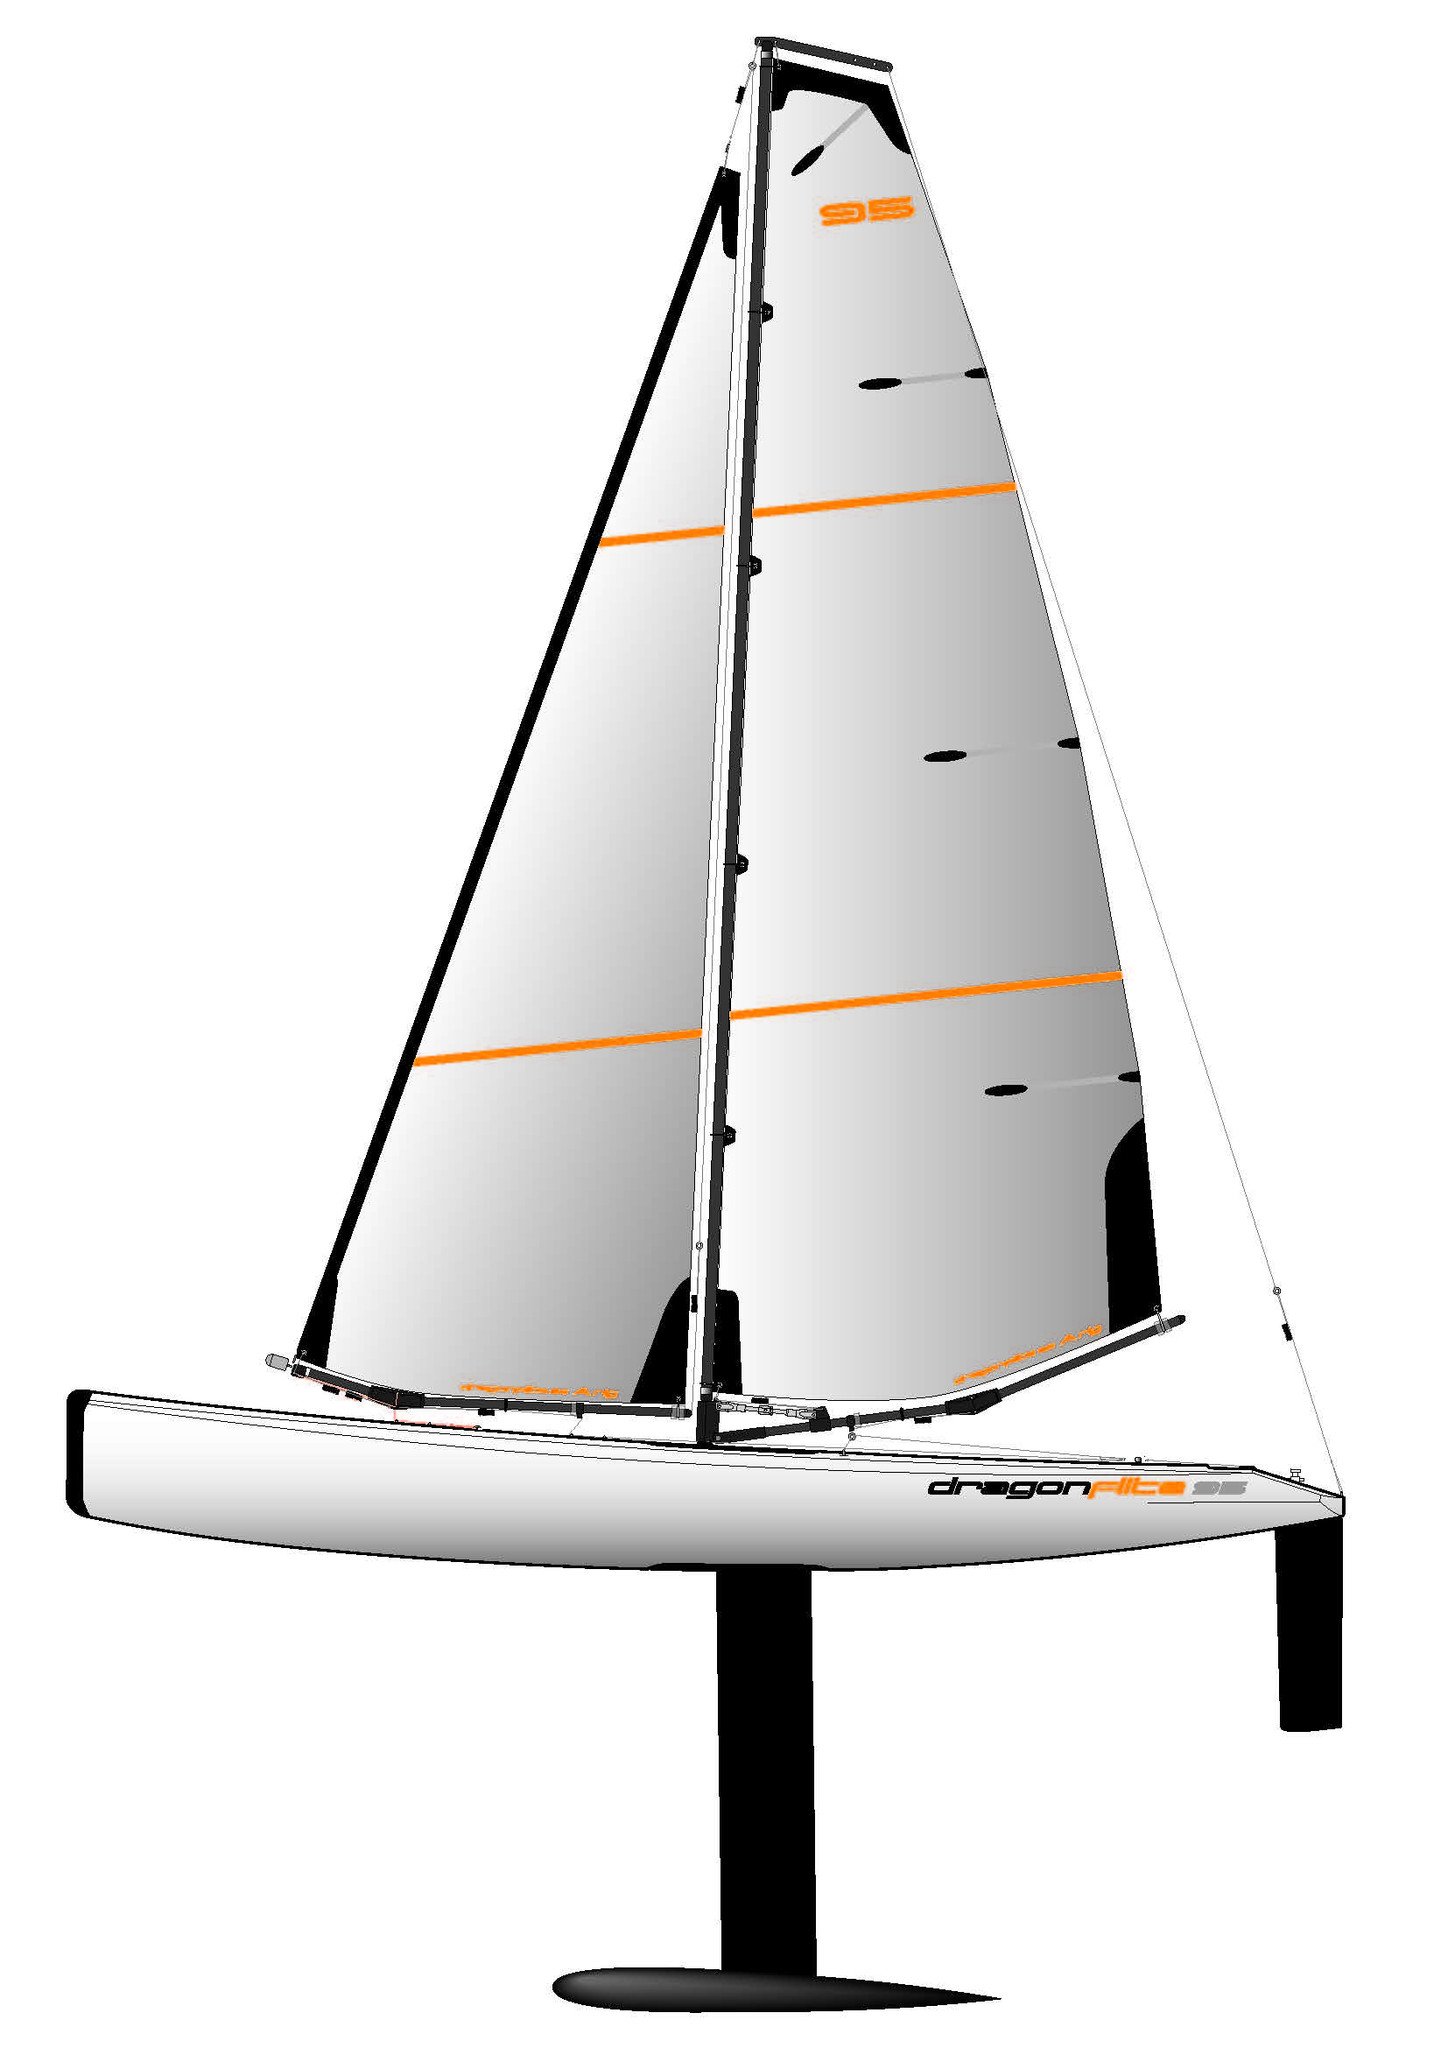 Joysway Dragon Flite 95 V2 Racing Sailing Yacht RTR (Model 2023)